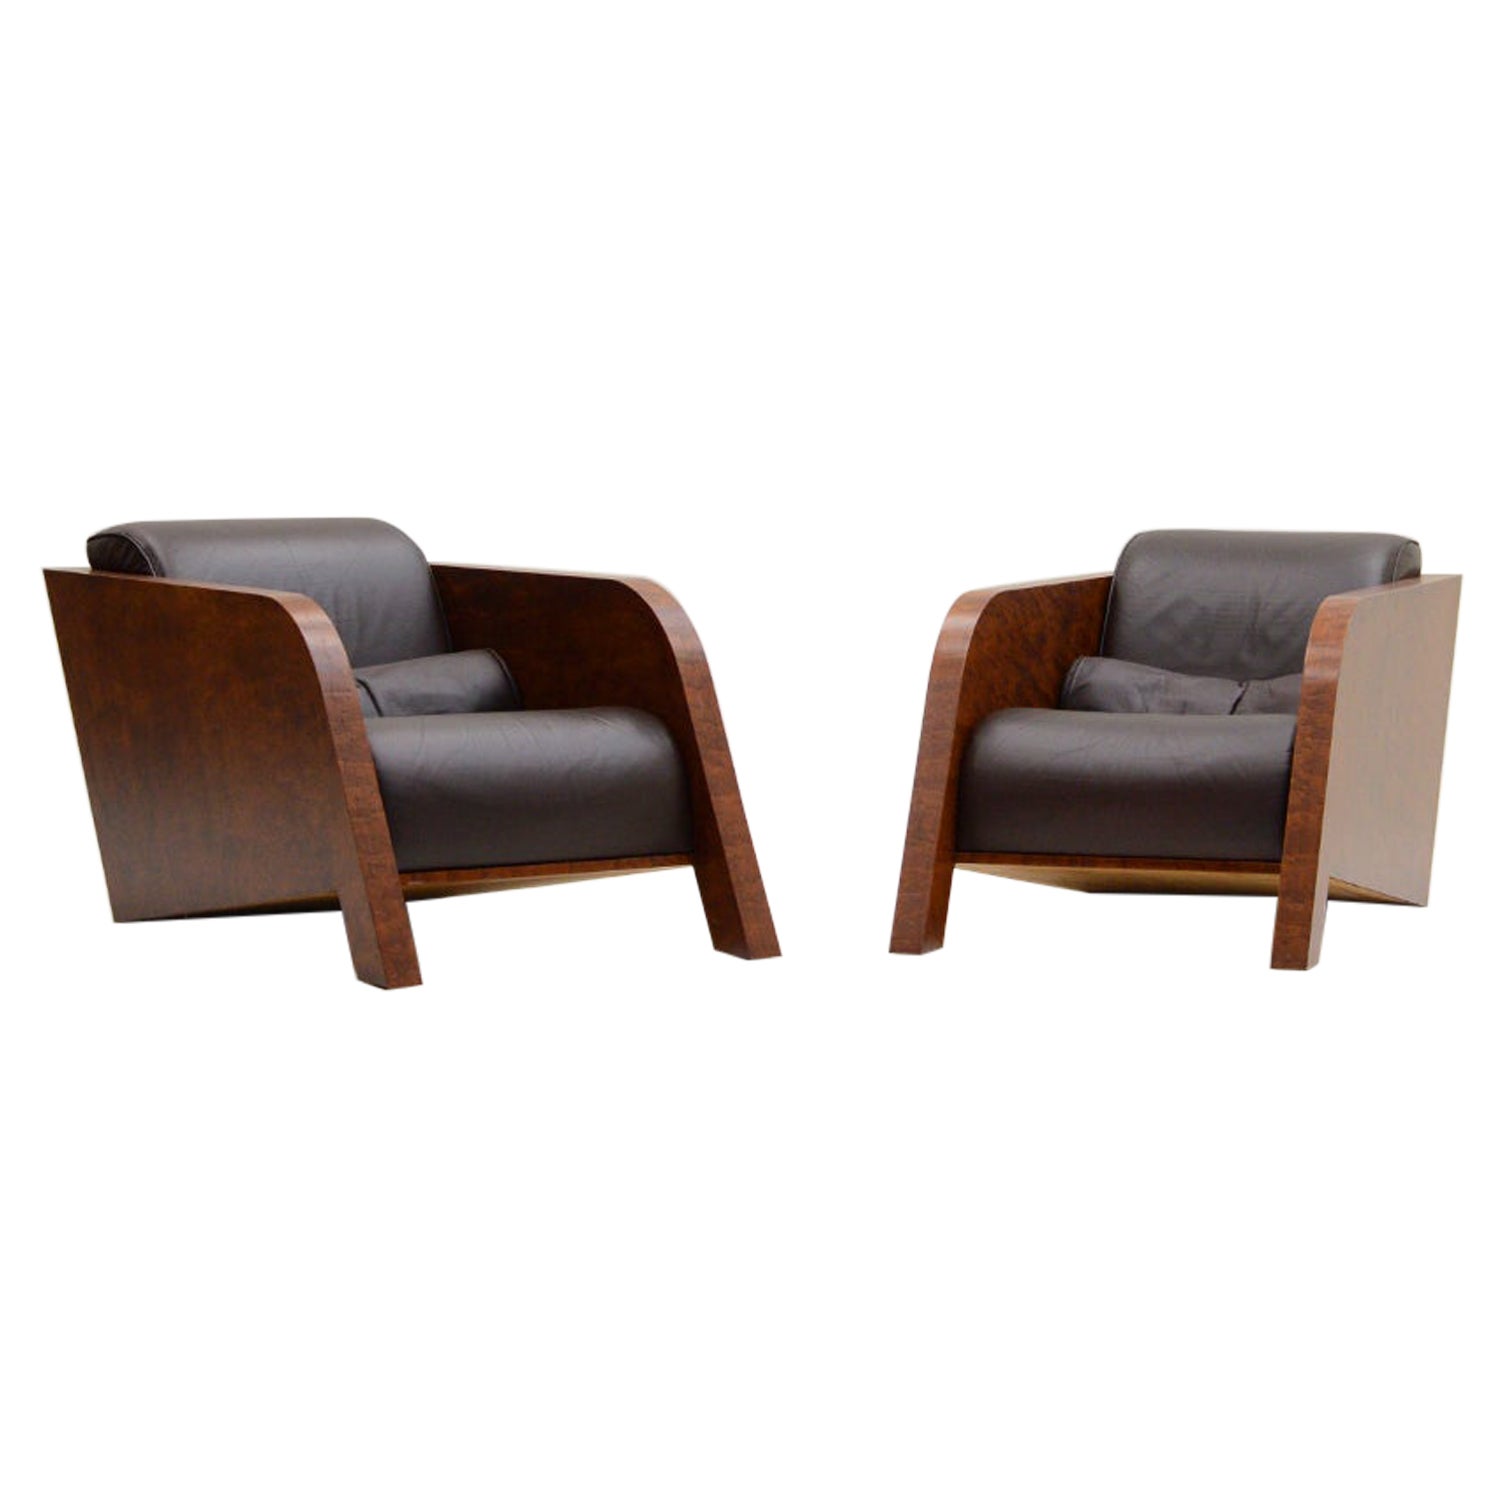 Set of 2 “Ypsilon” lounge chairs by Ulf Moritz, 1980s The Netherlands.